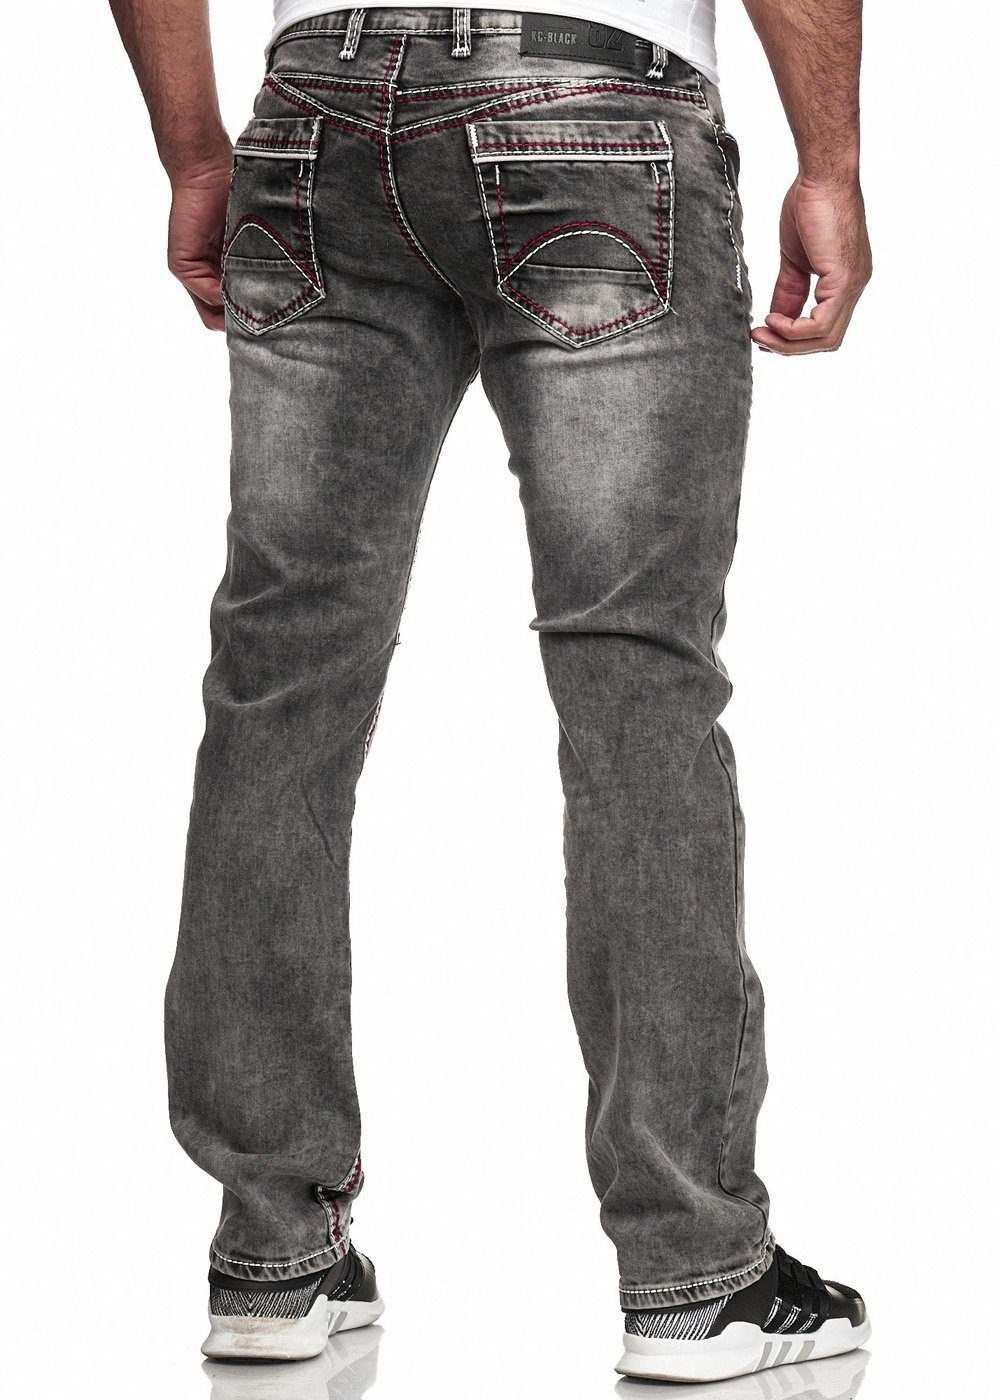 Code47 5056 Jeans Dunkelgrau Regular-fit-Jeans verschiedene Modelle